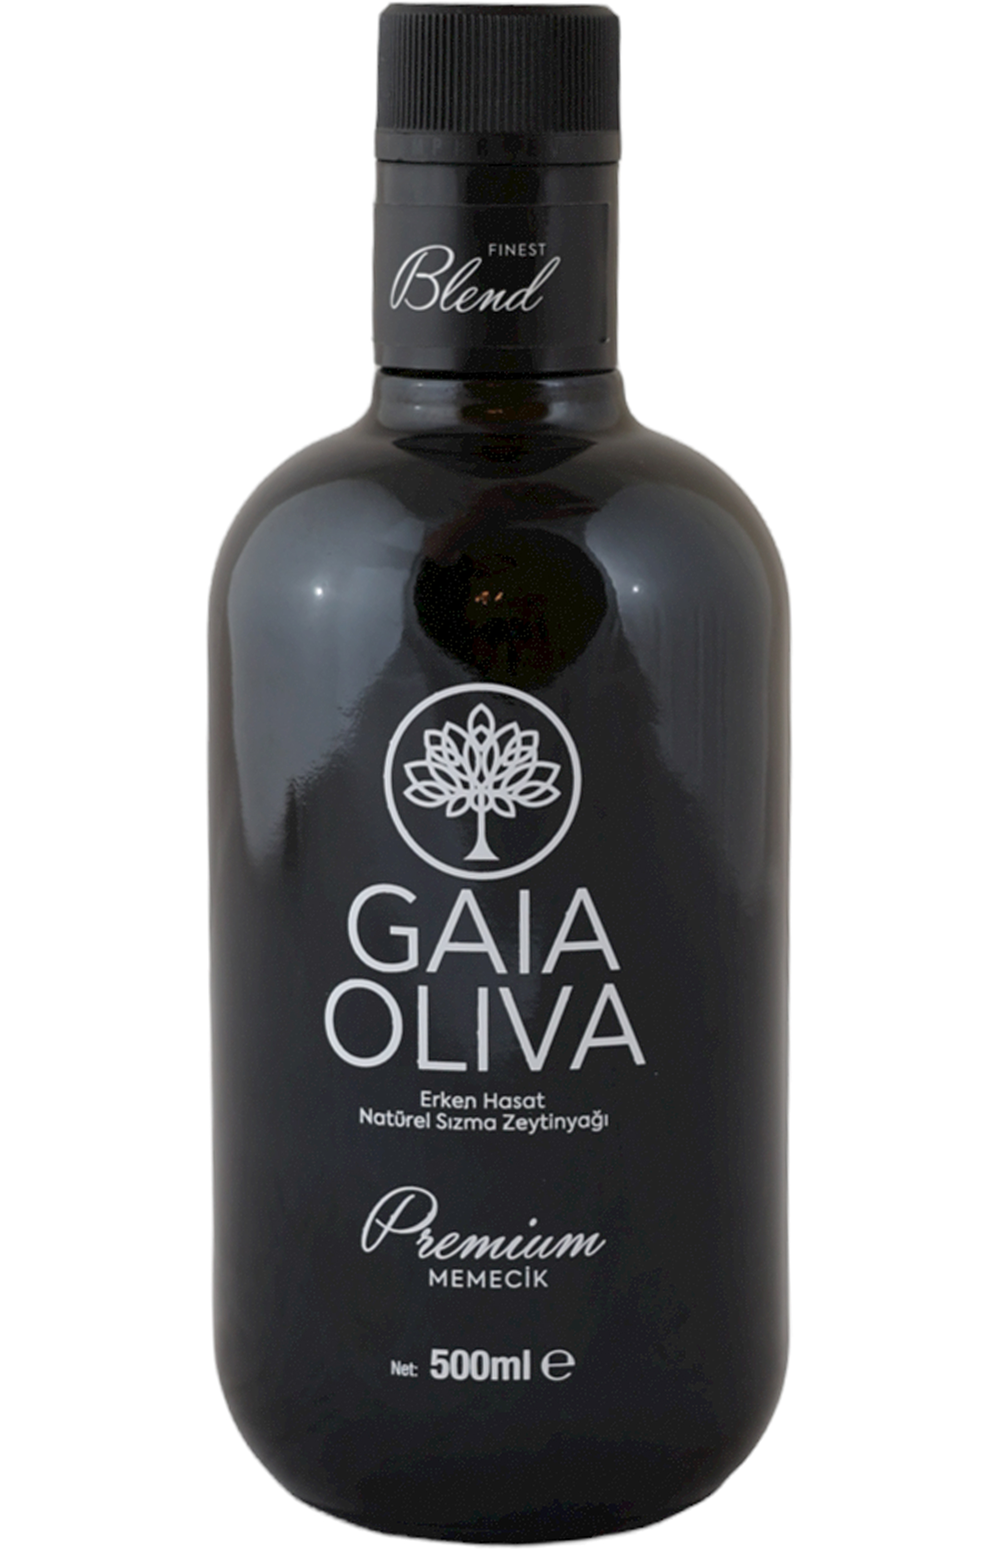 Gaia Oliva Finest Blend